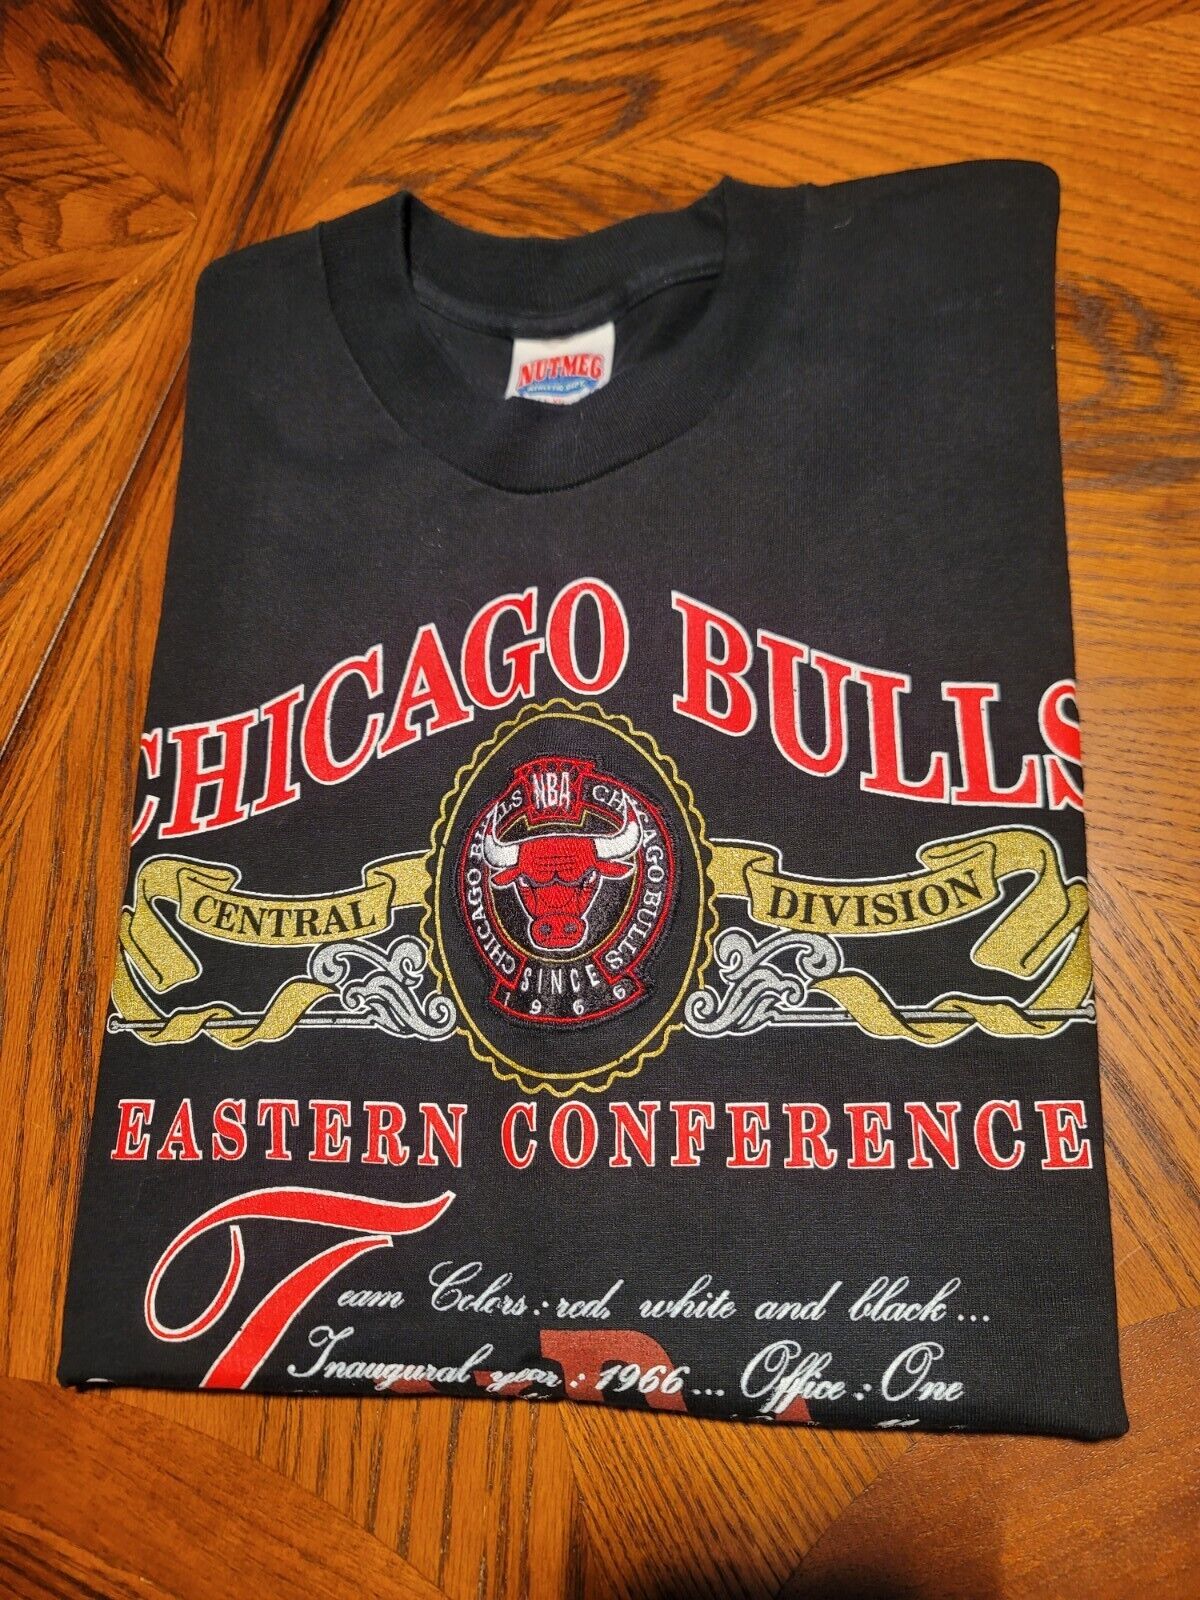 Vintage Chicago Bulls Nutmeg T-Shirt Small